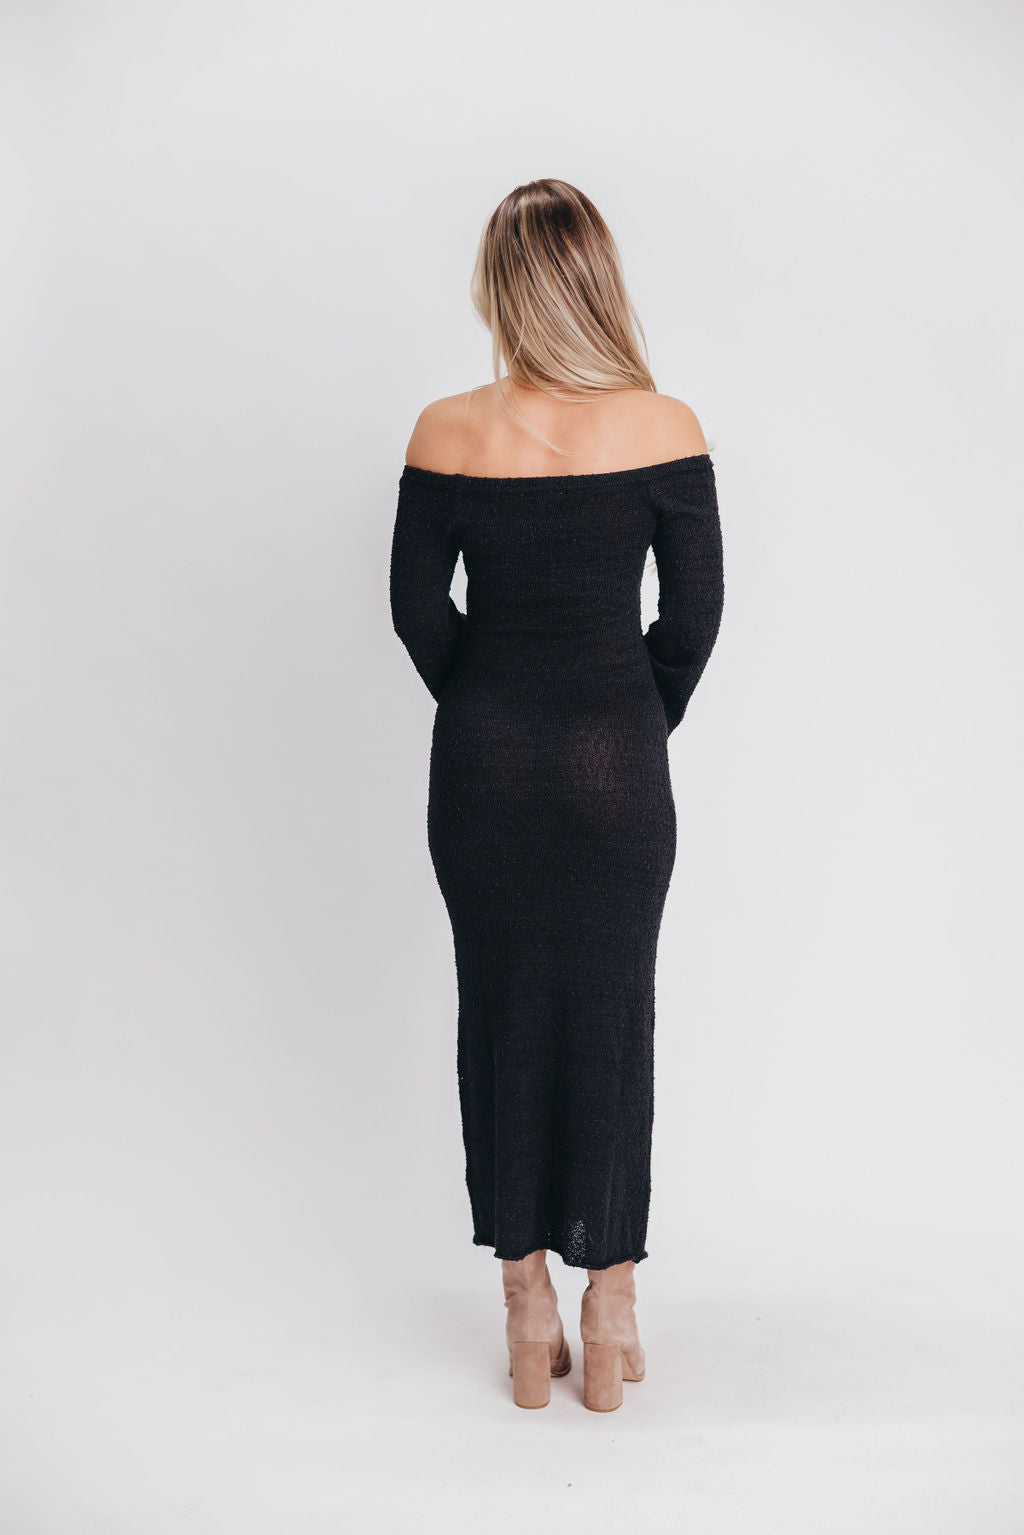 Tanner Knit Off-the-Shoulder Maxi Dress in Black